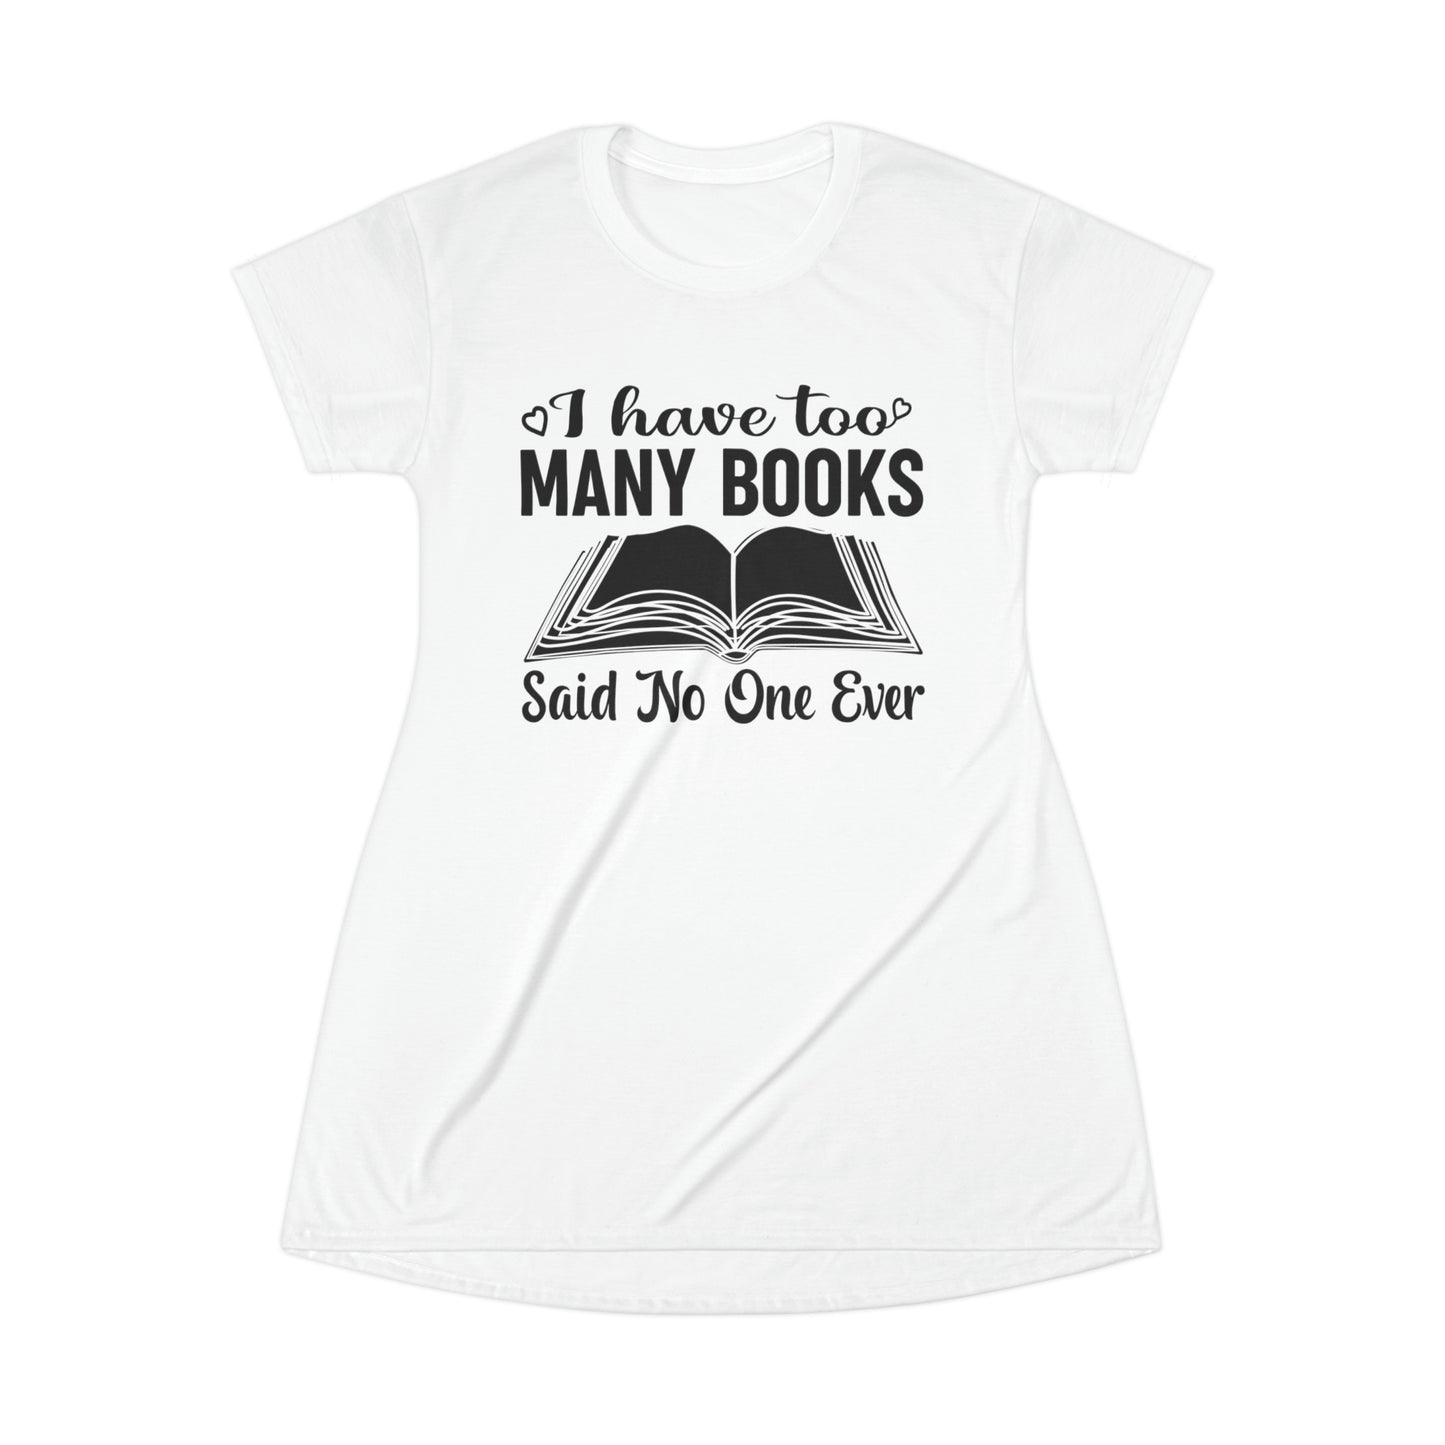 "I Have Too Many Books... Said No One Ever" T-Shirt Dress